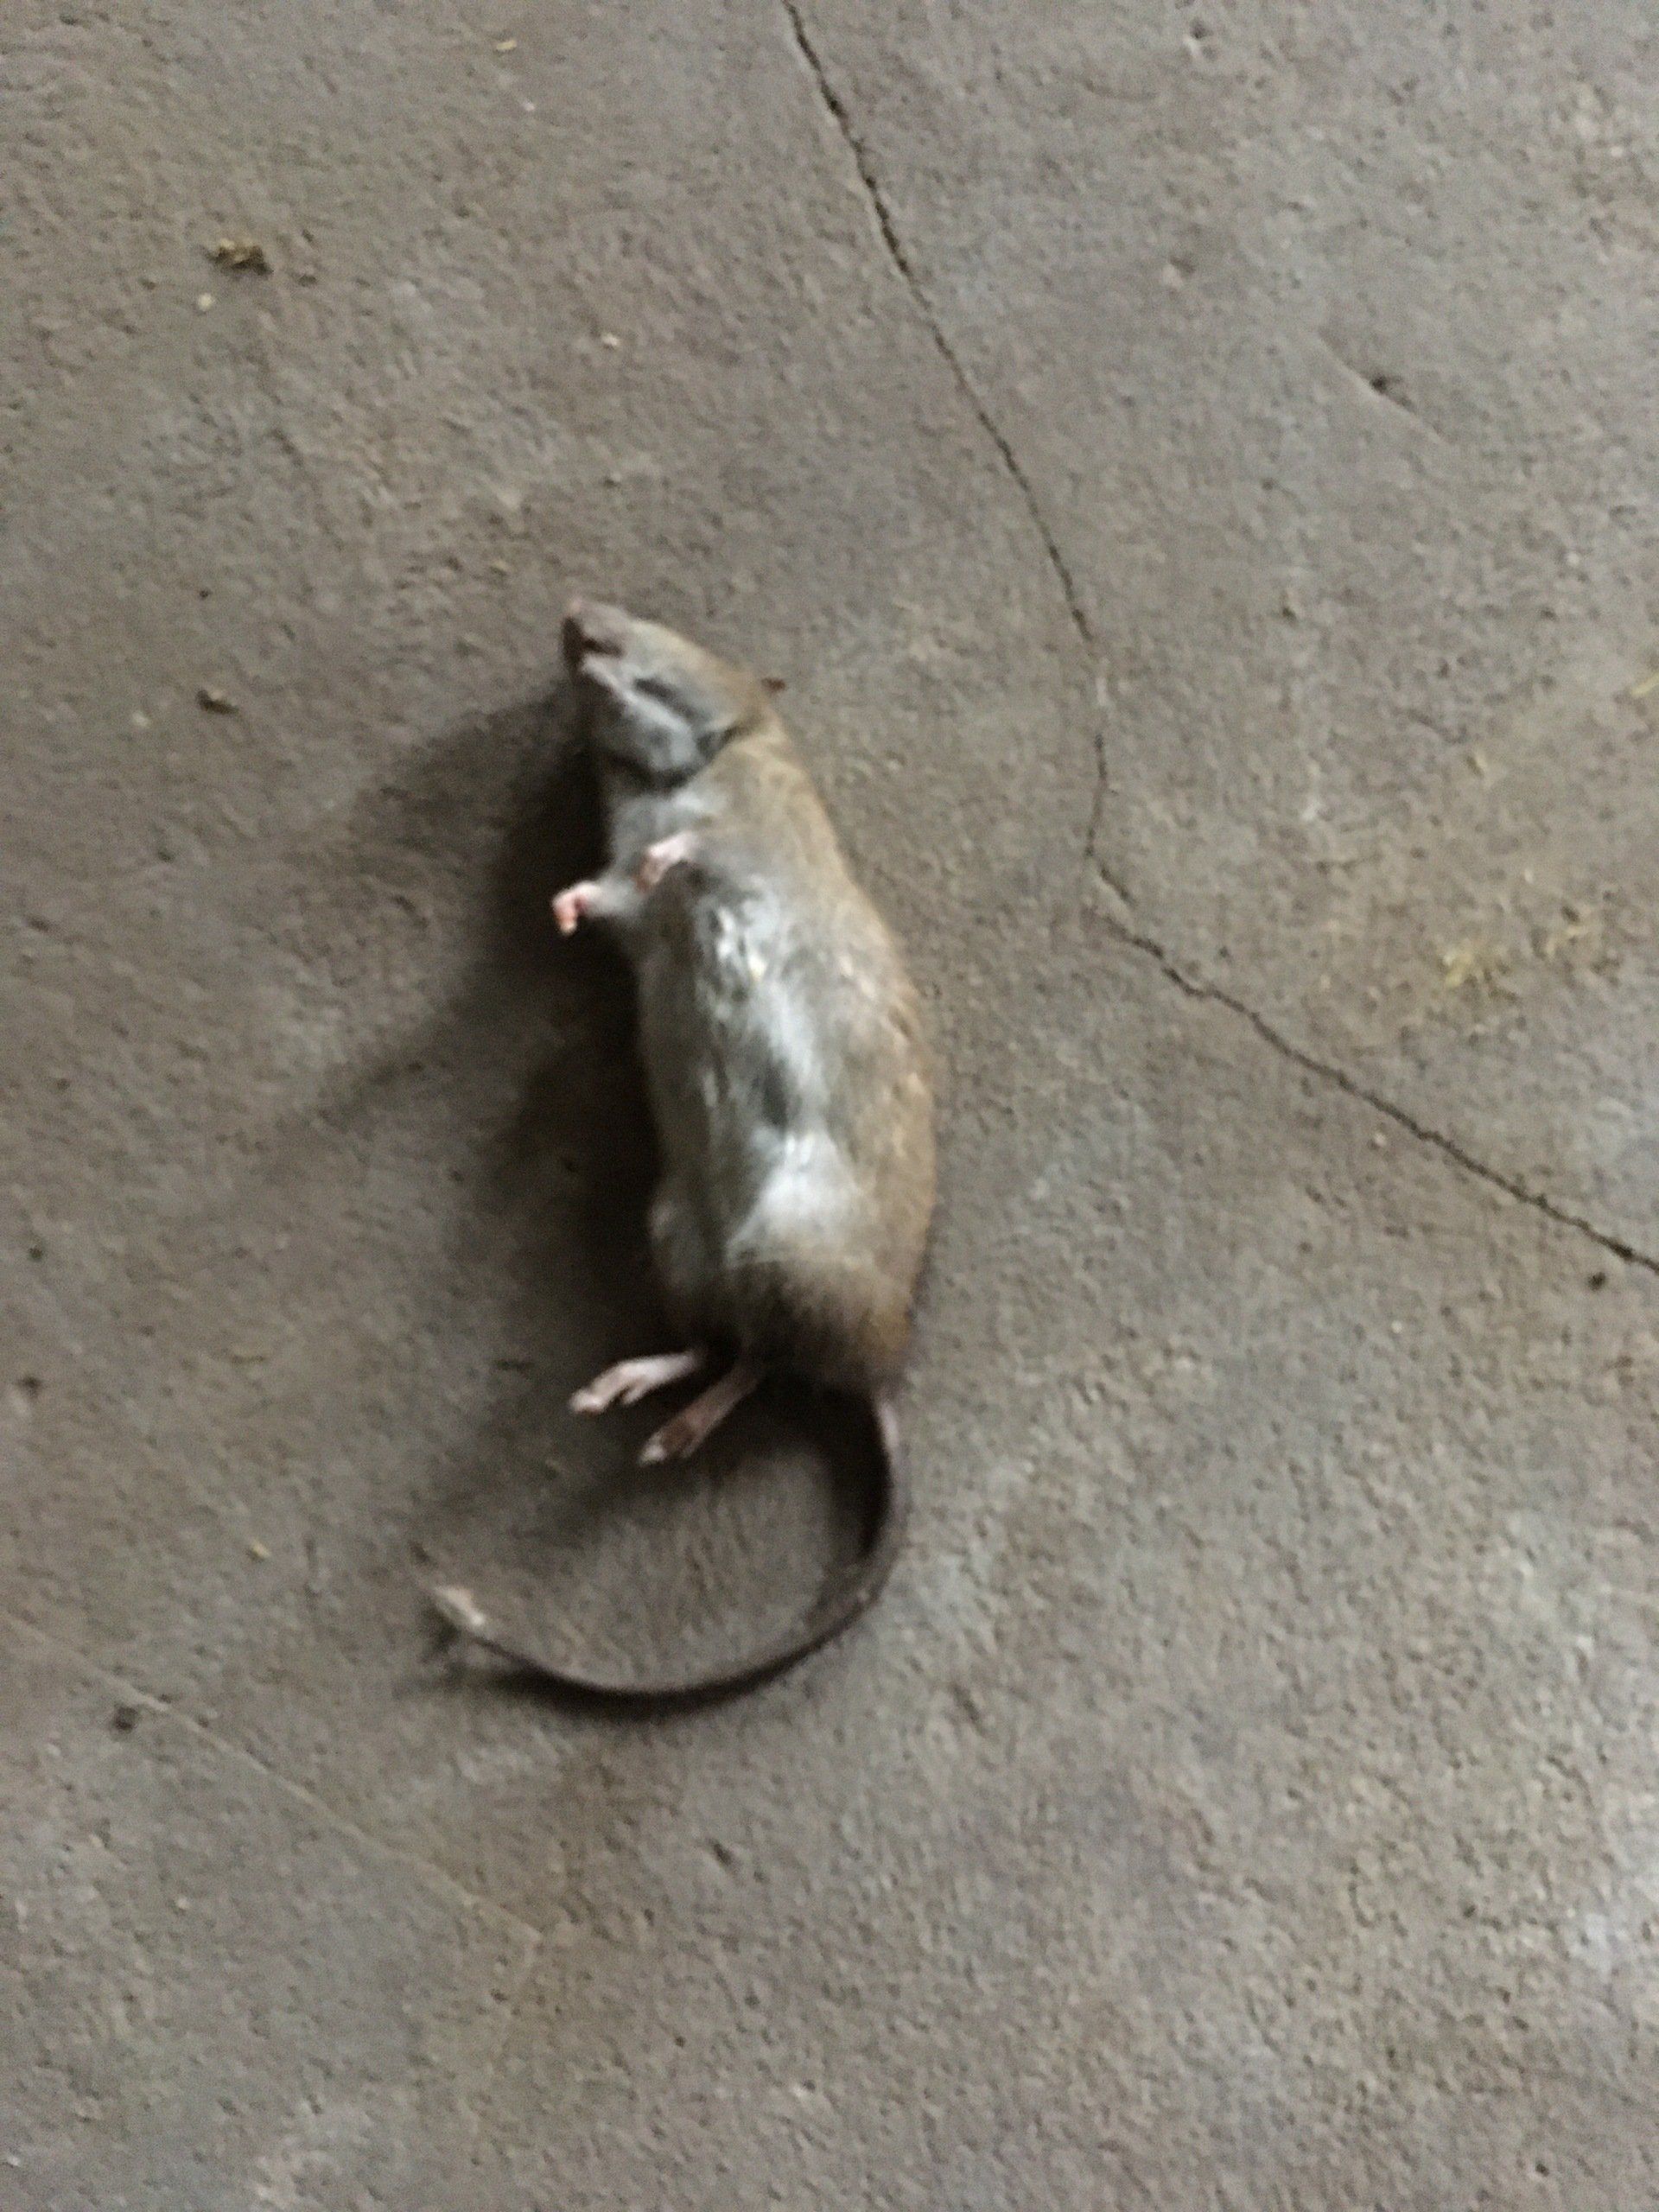 Død rotte liggende på betongulv